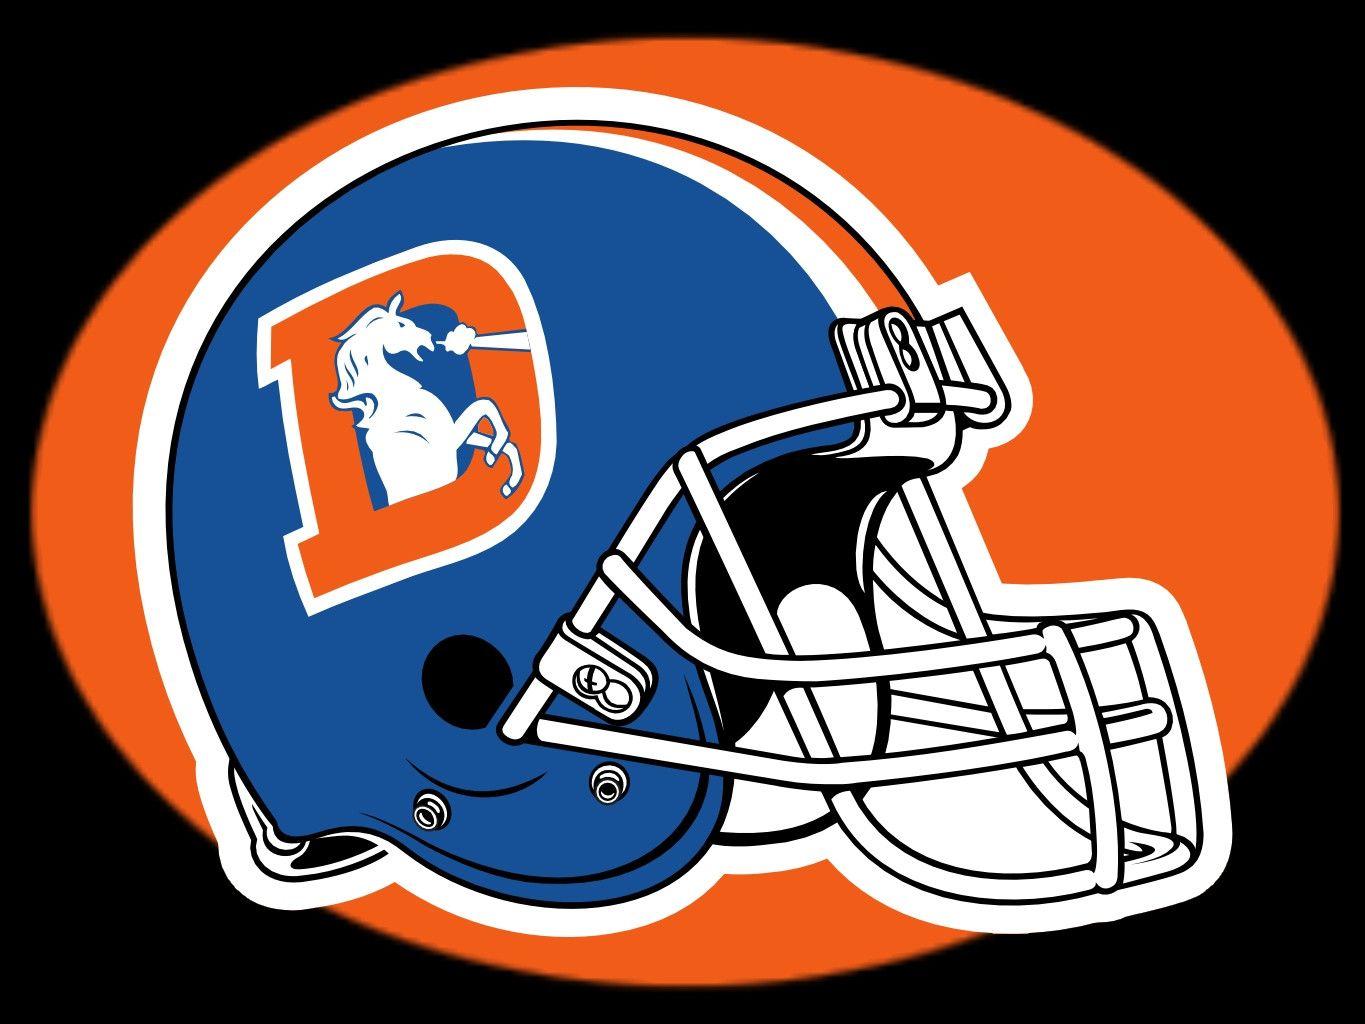 Denver Broncos Team Helmet Wallpaper. Download High Quality